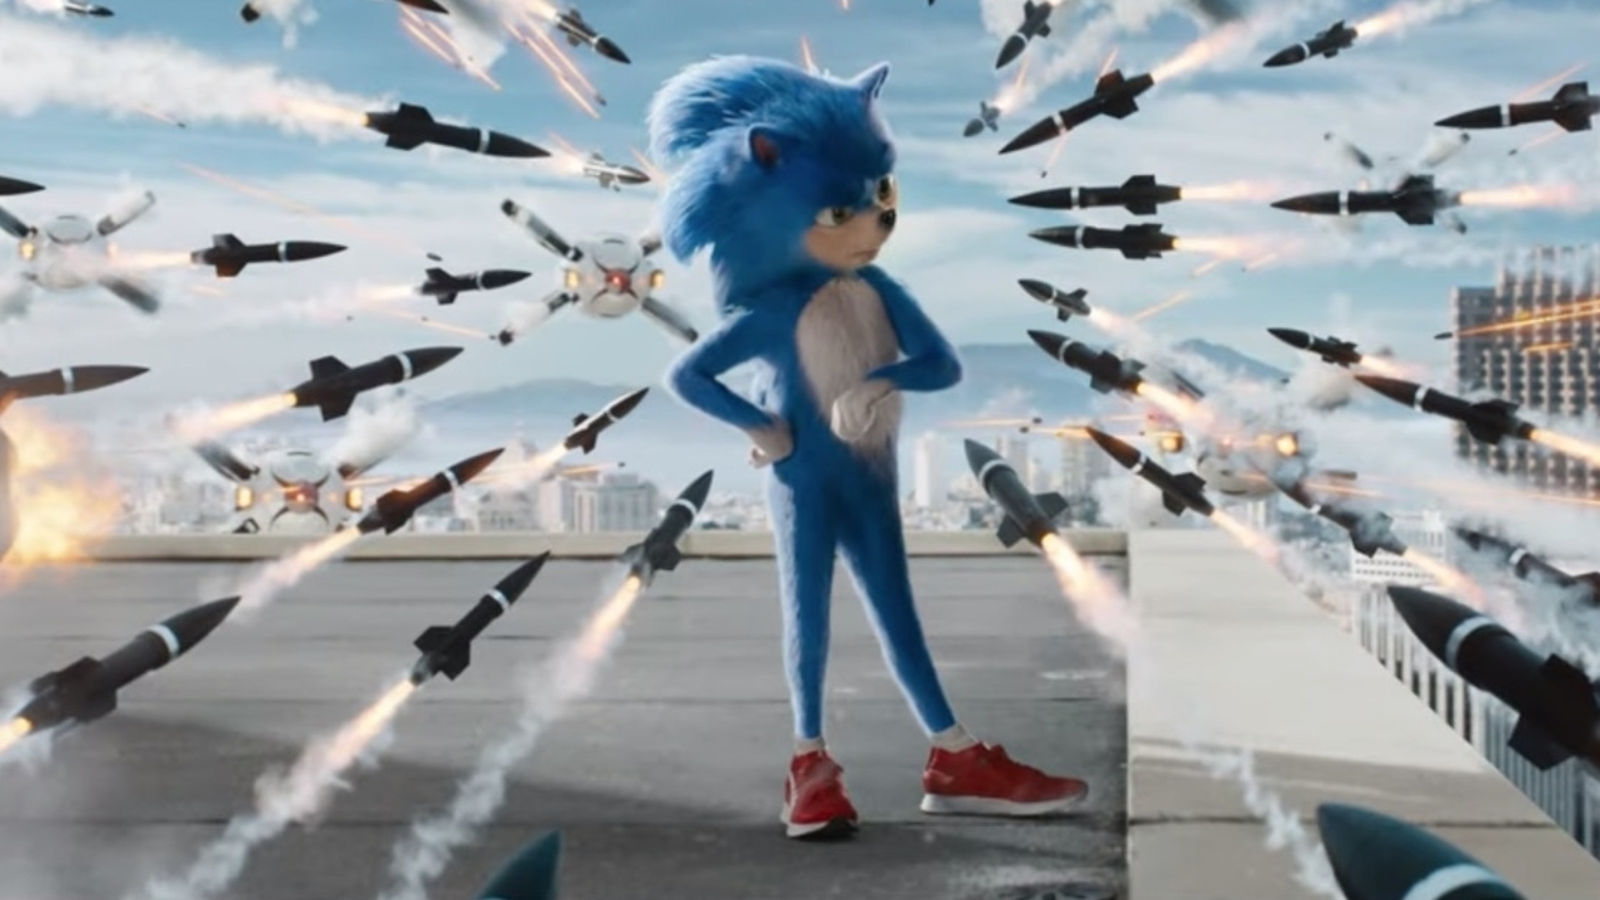 Sonic The Hedgehog's Title Character To Undergo Design Tweaks, Movies